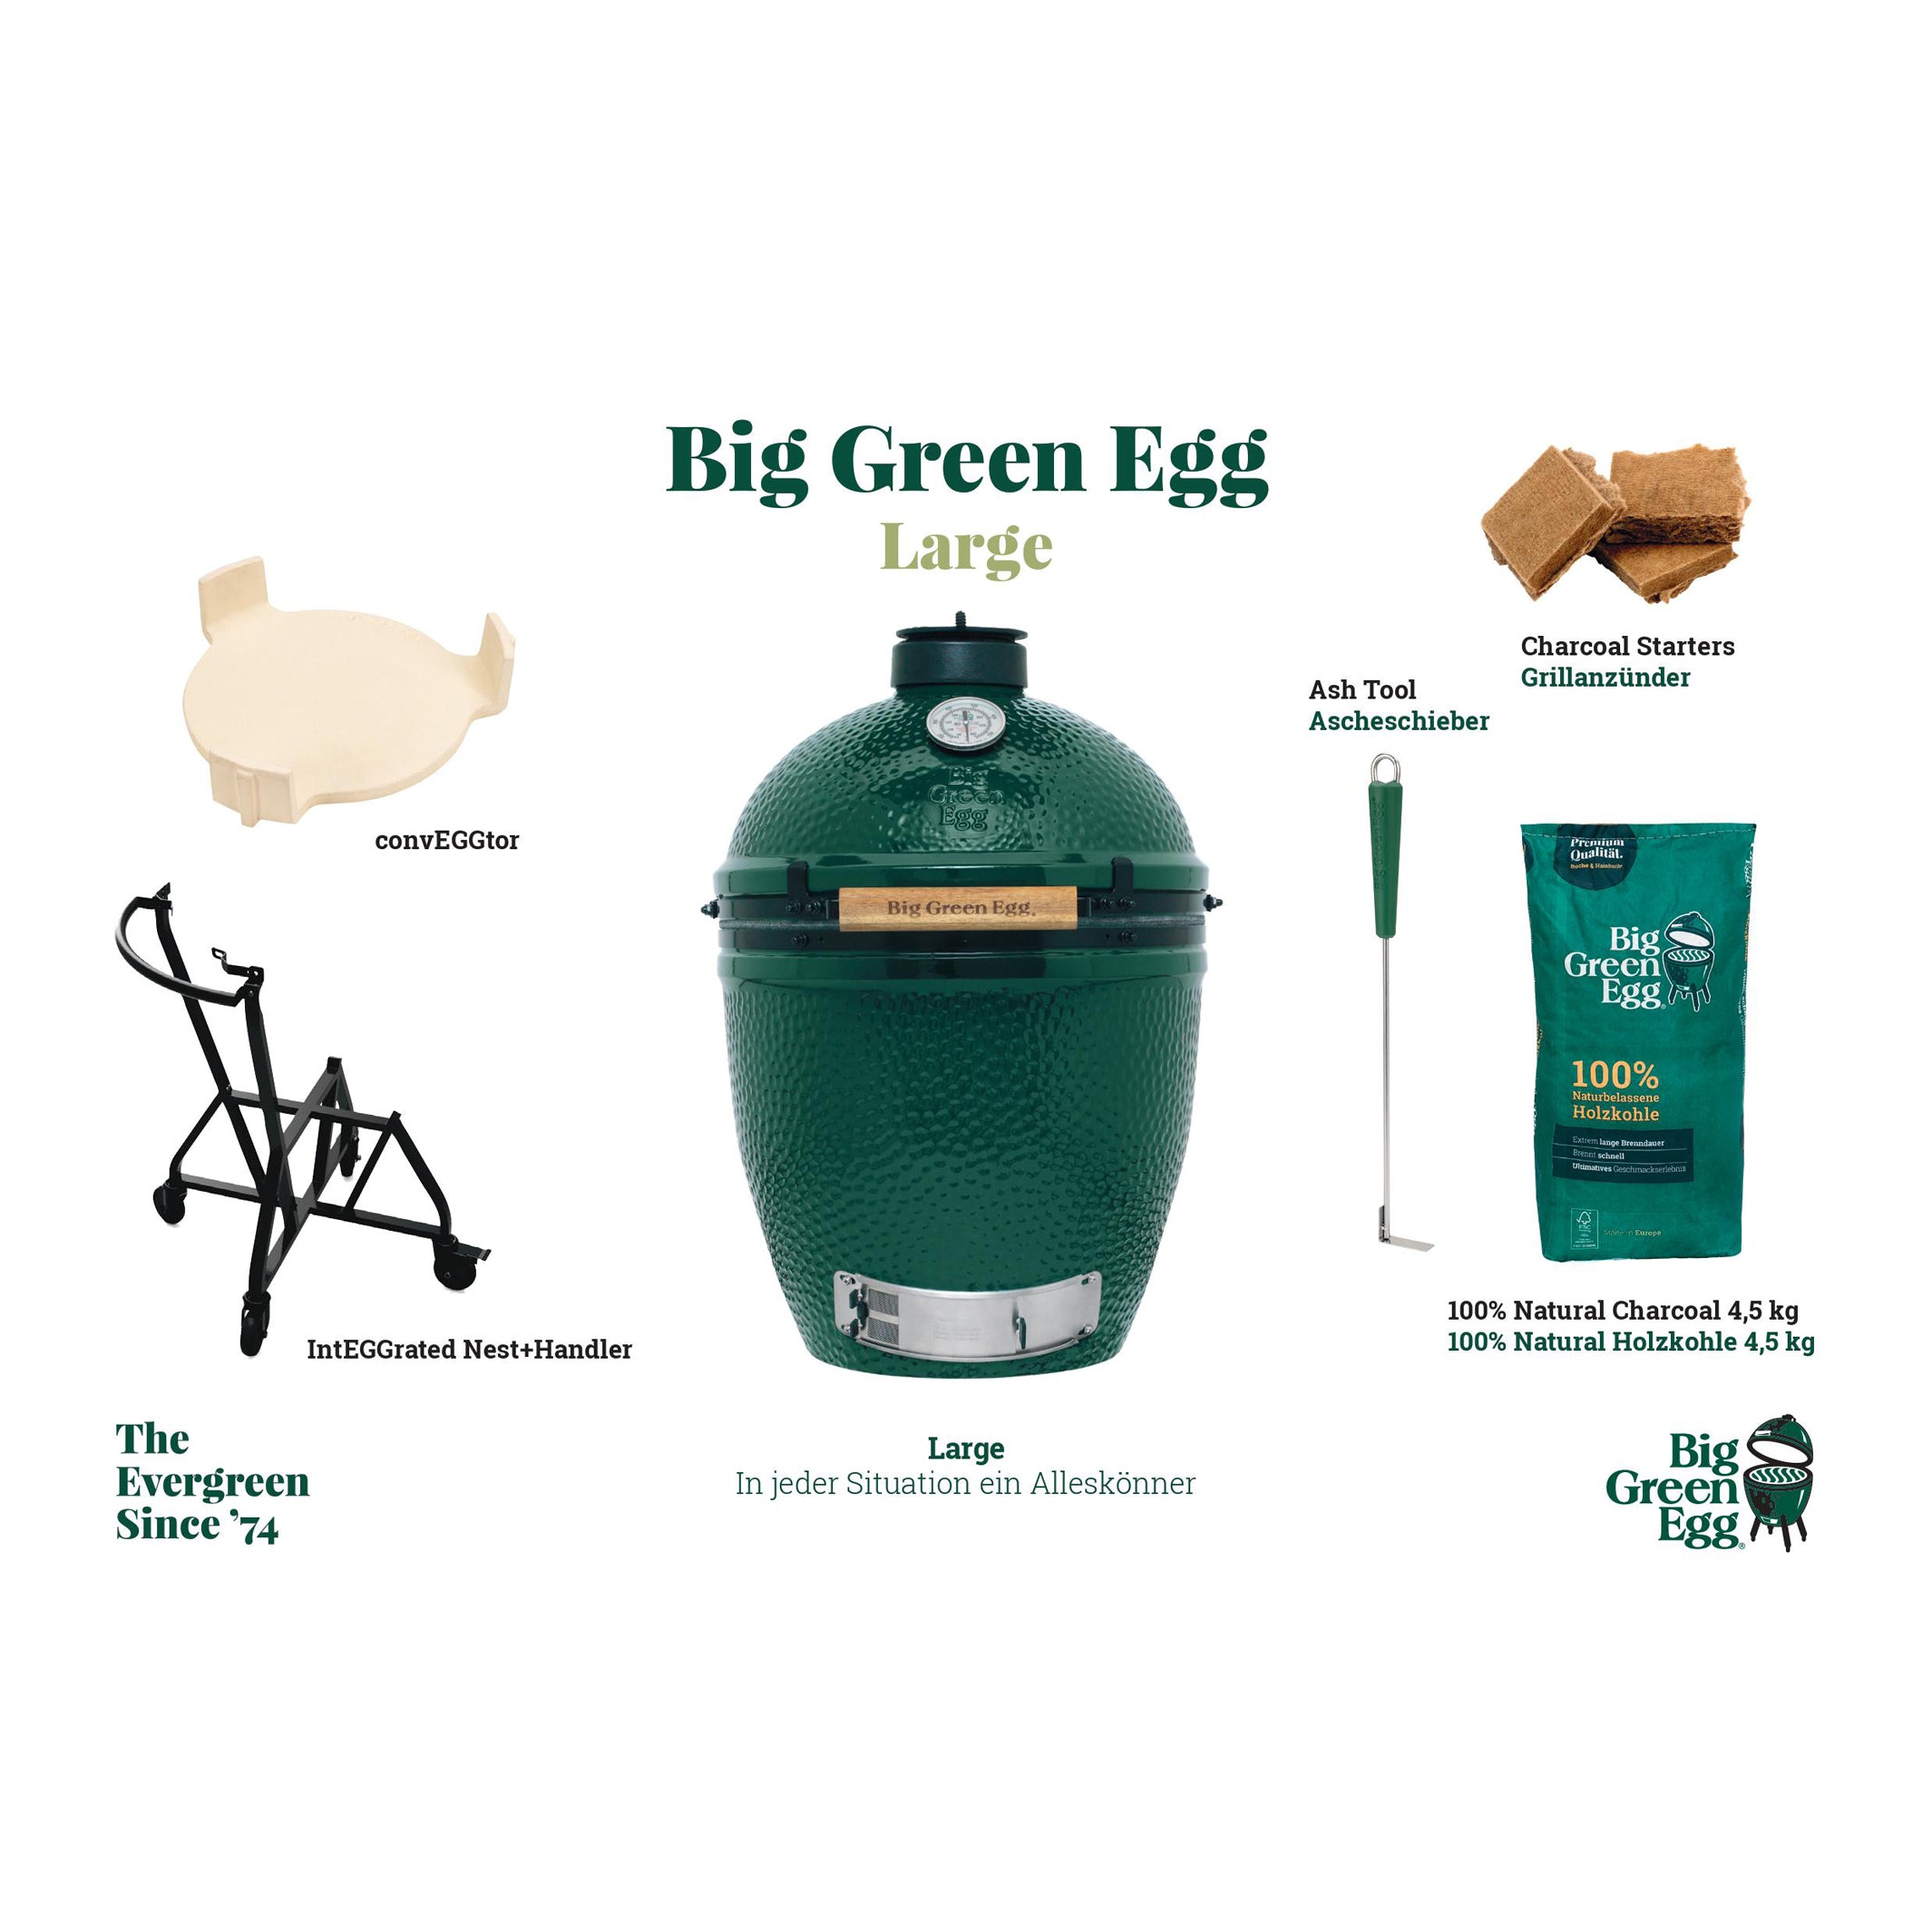 BIG GREEN EGG LARGE | KERAMIKGRILL | STARTER-SET | Big Green Egg